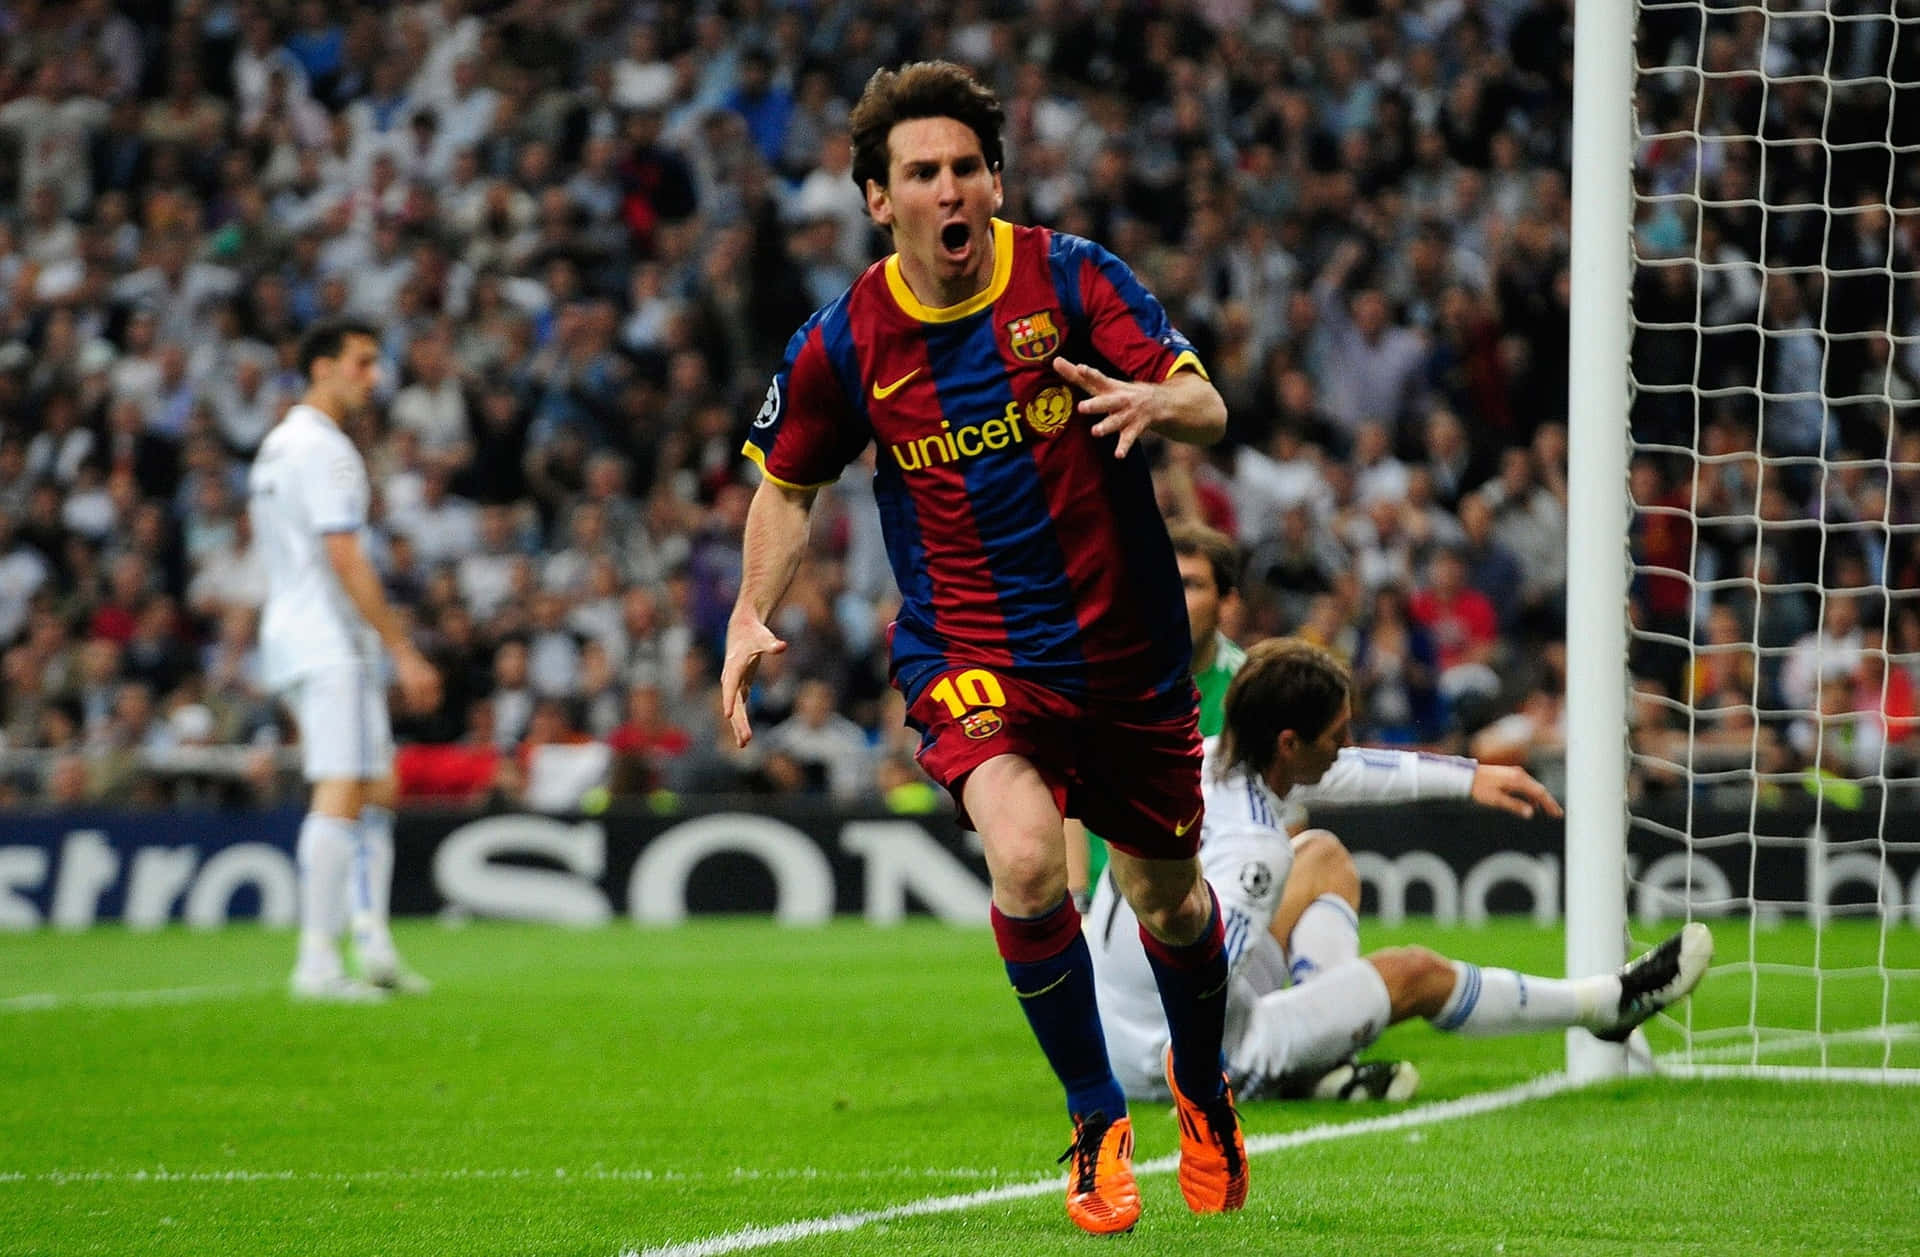 “Messi: A Football Legend"